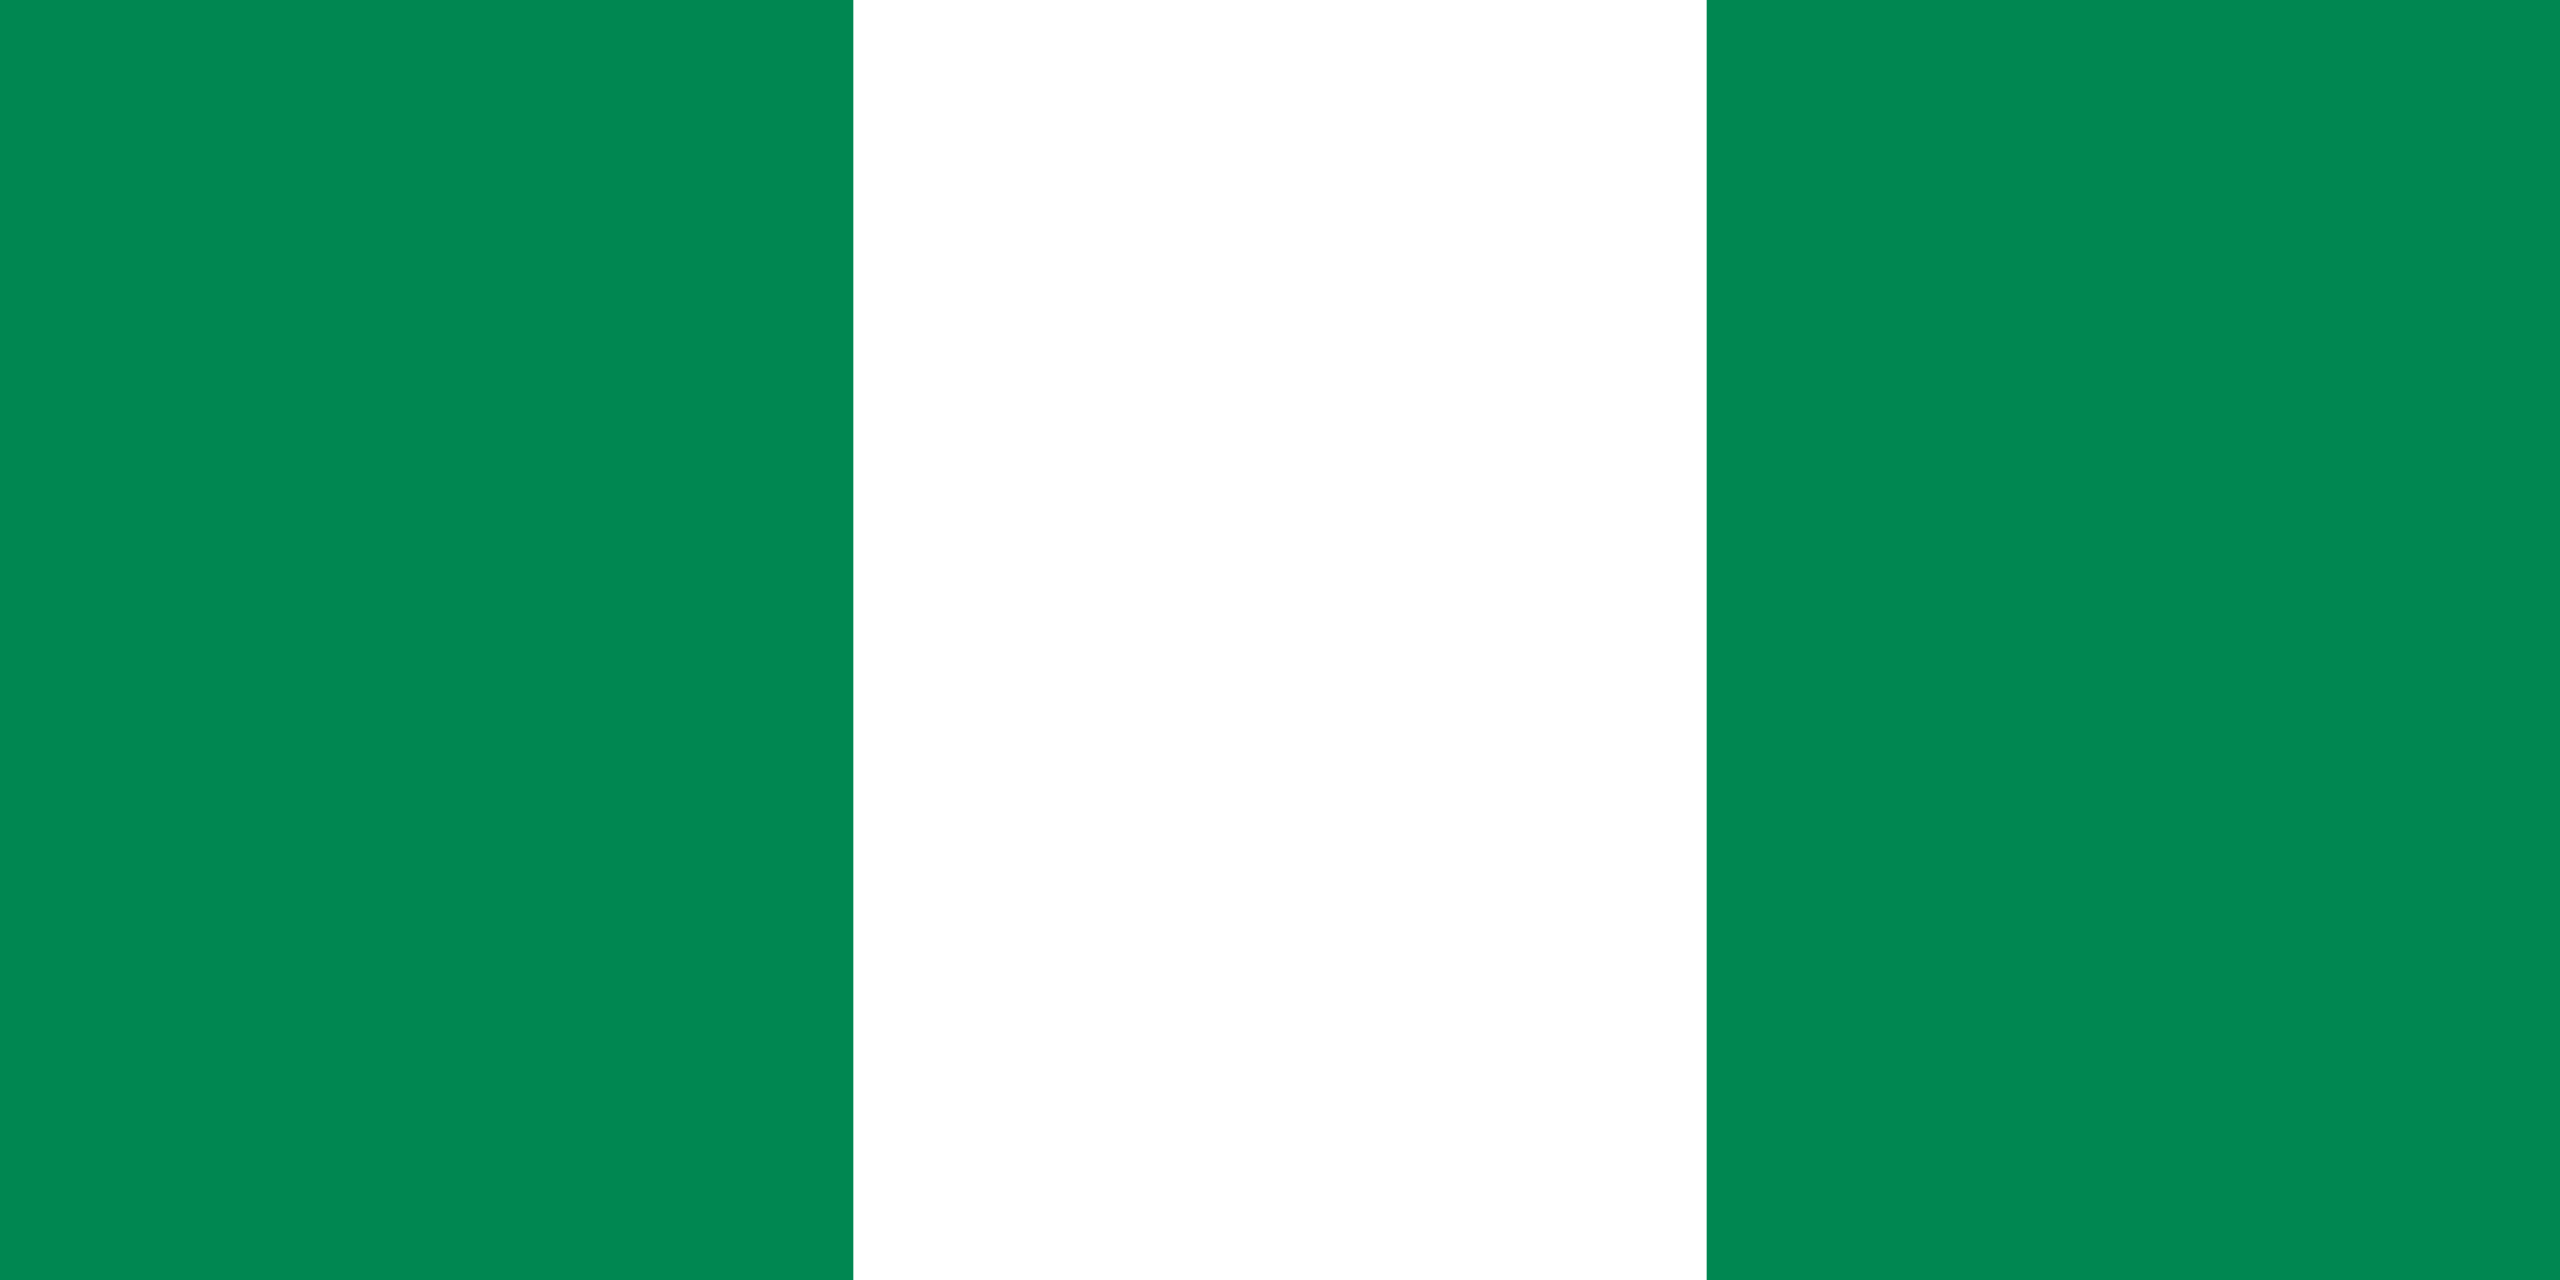 Illustration of Nigeria flag